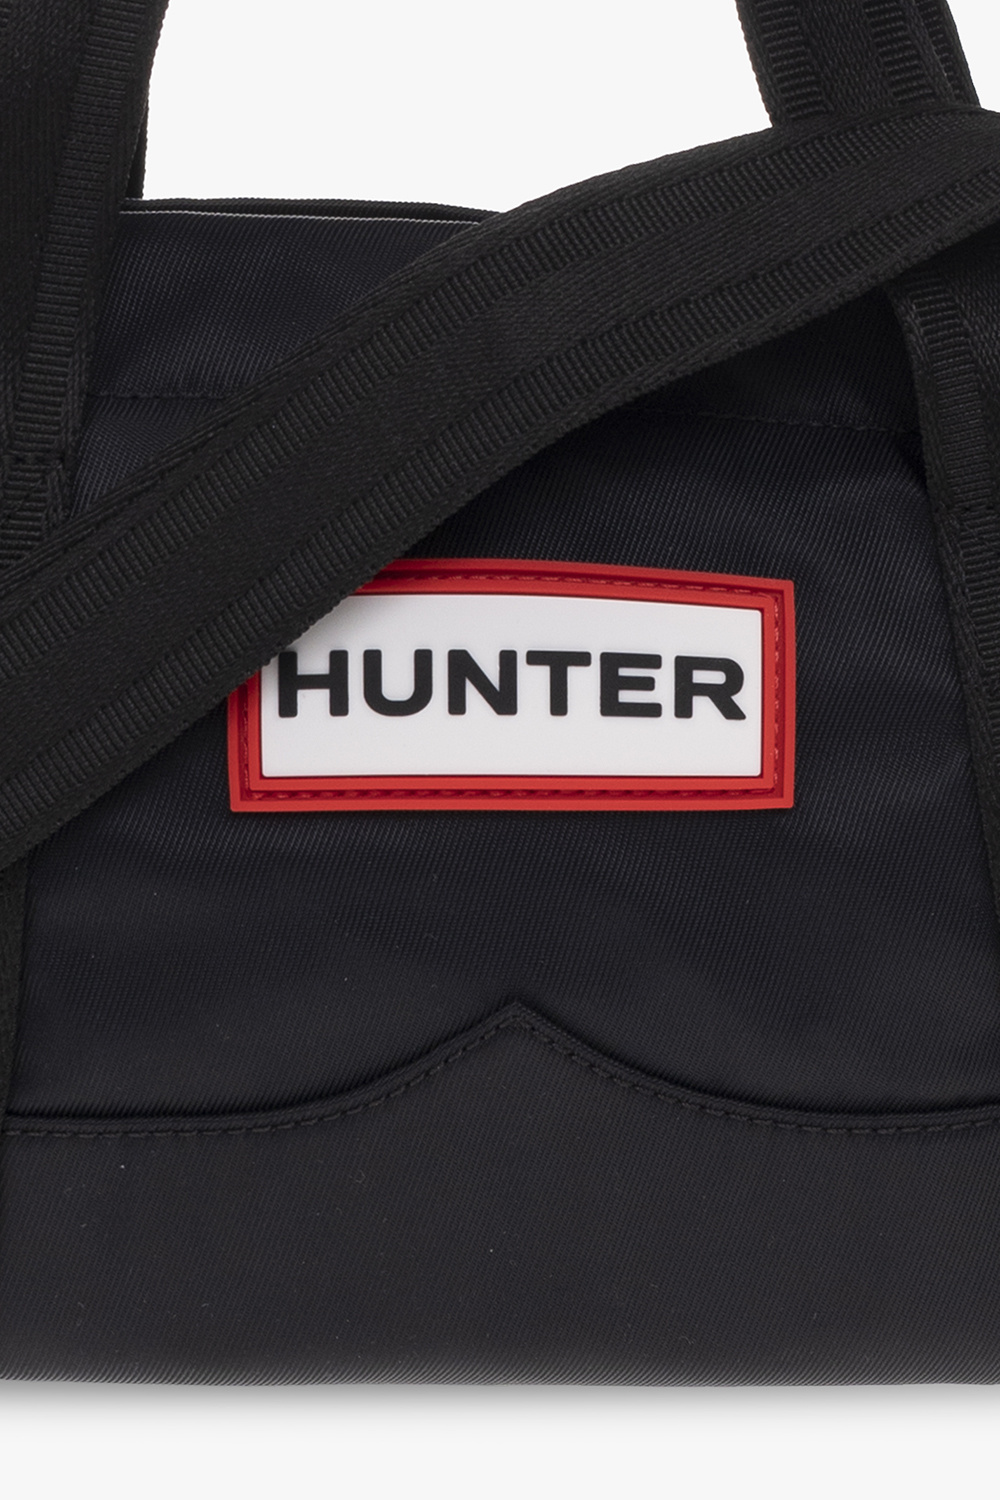 Hunter backpack doughnut d010 0259 f macaroon cream iceberg sakura